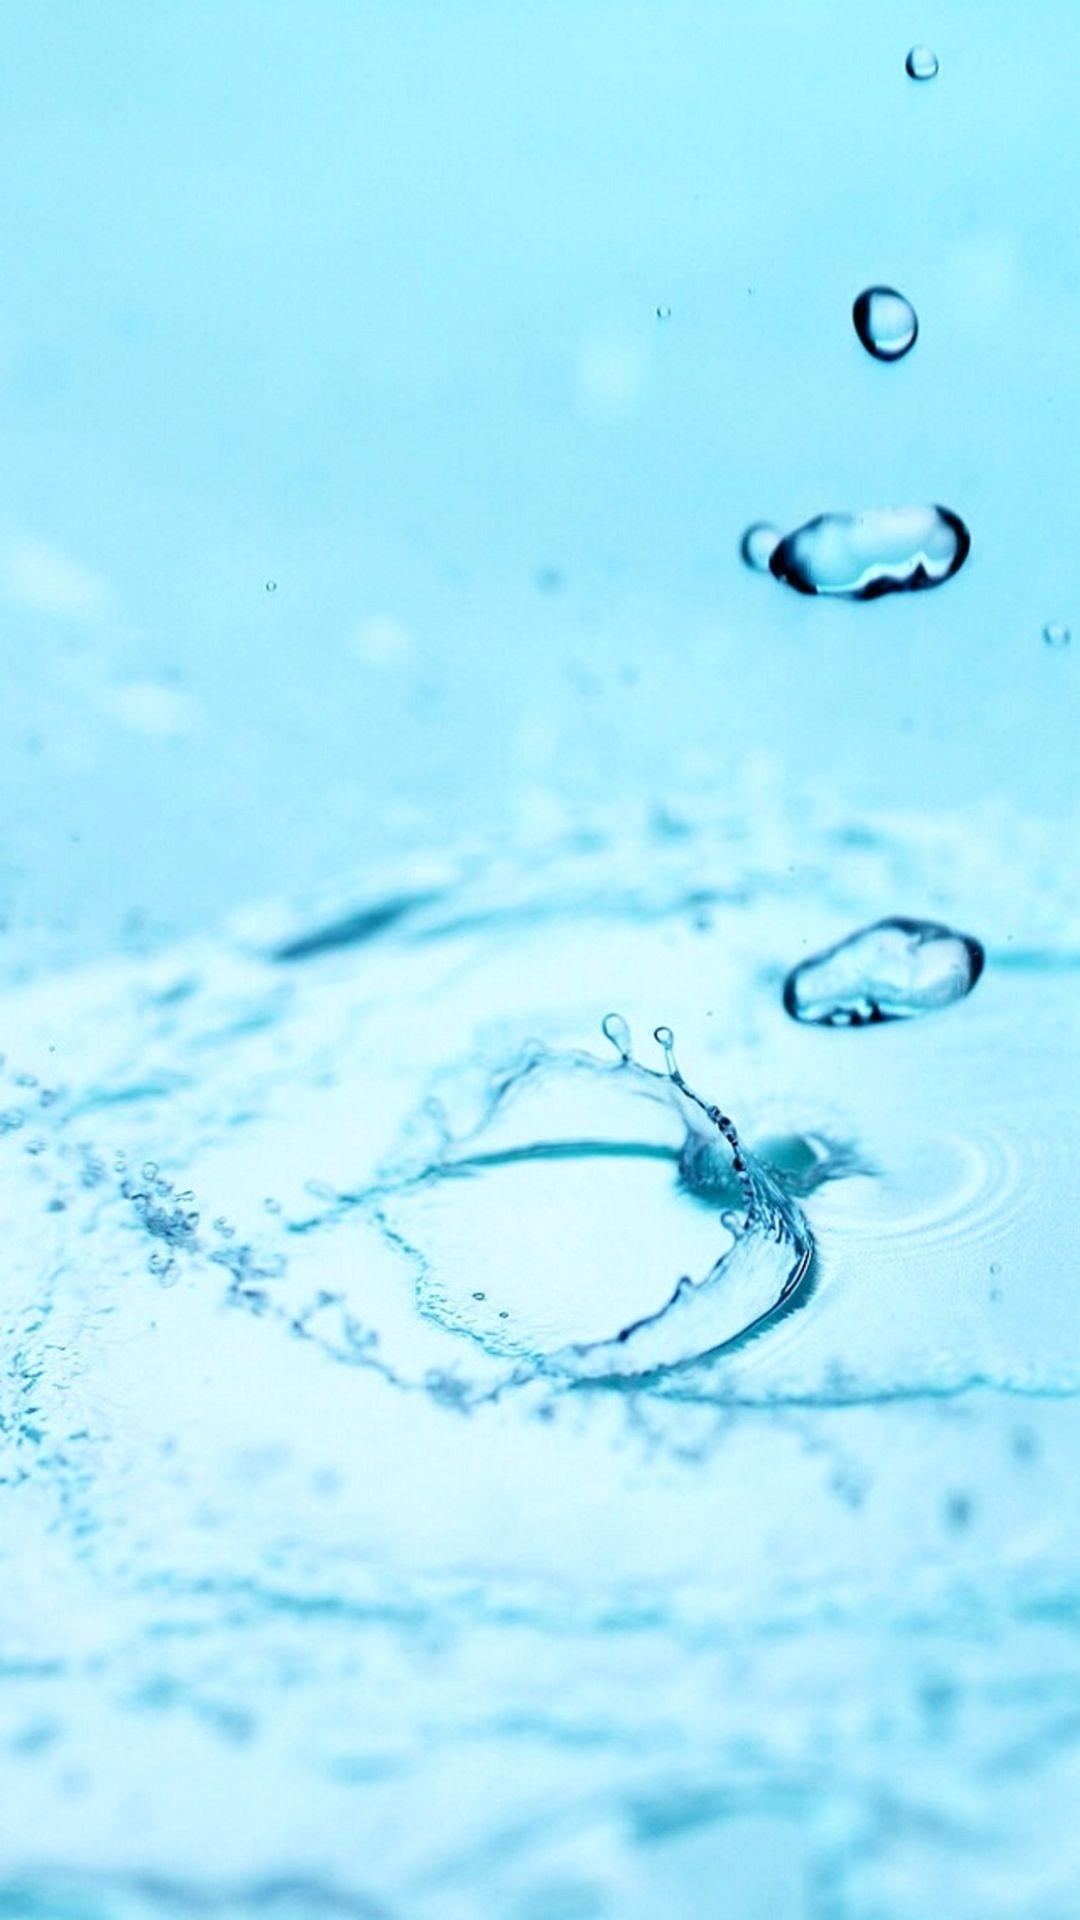 Abstract Water Splash Bubble iPhone 6 wallpaper. Blue Wallpaper